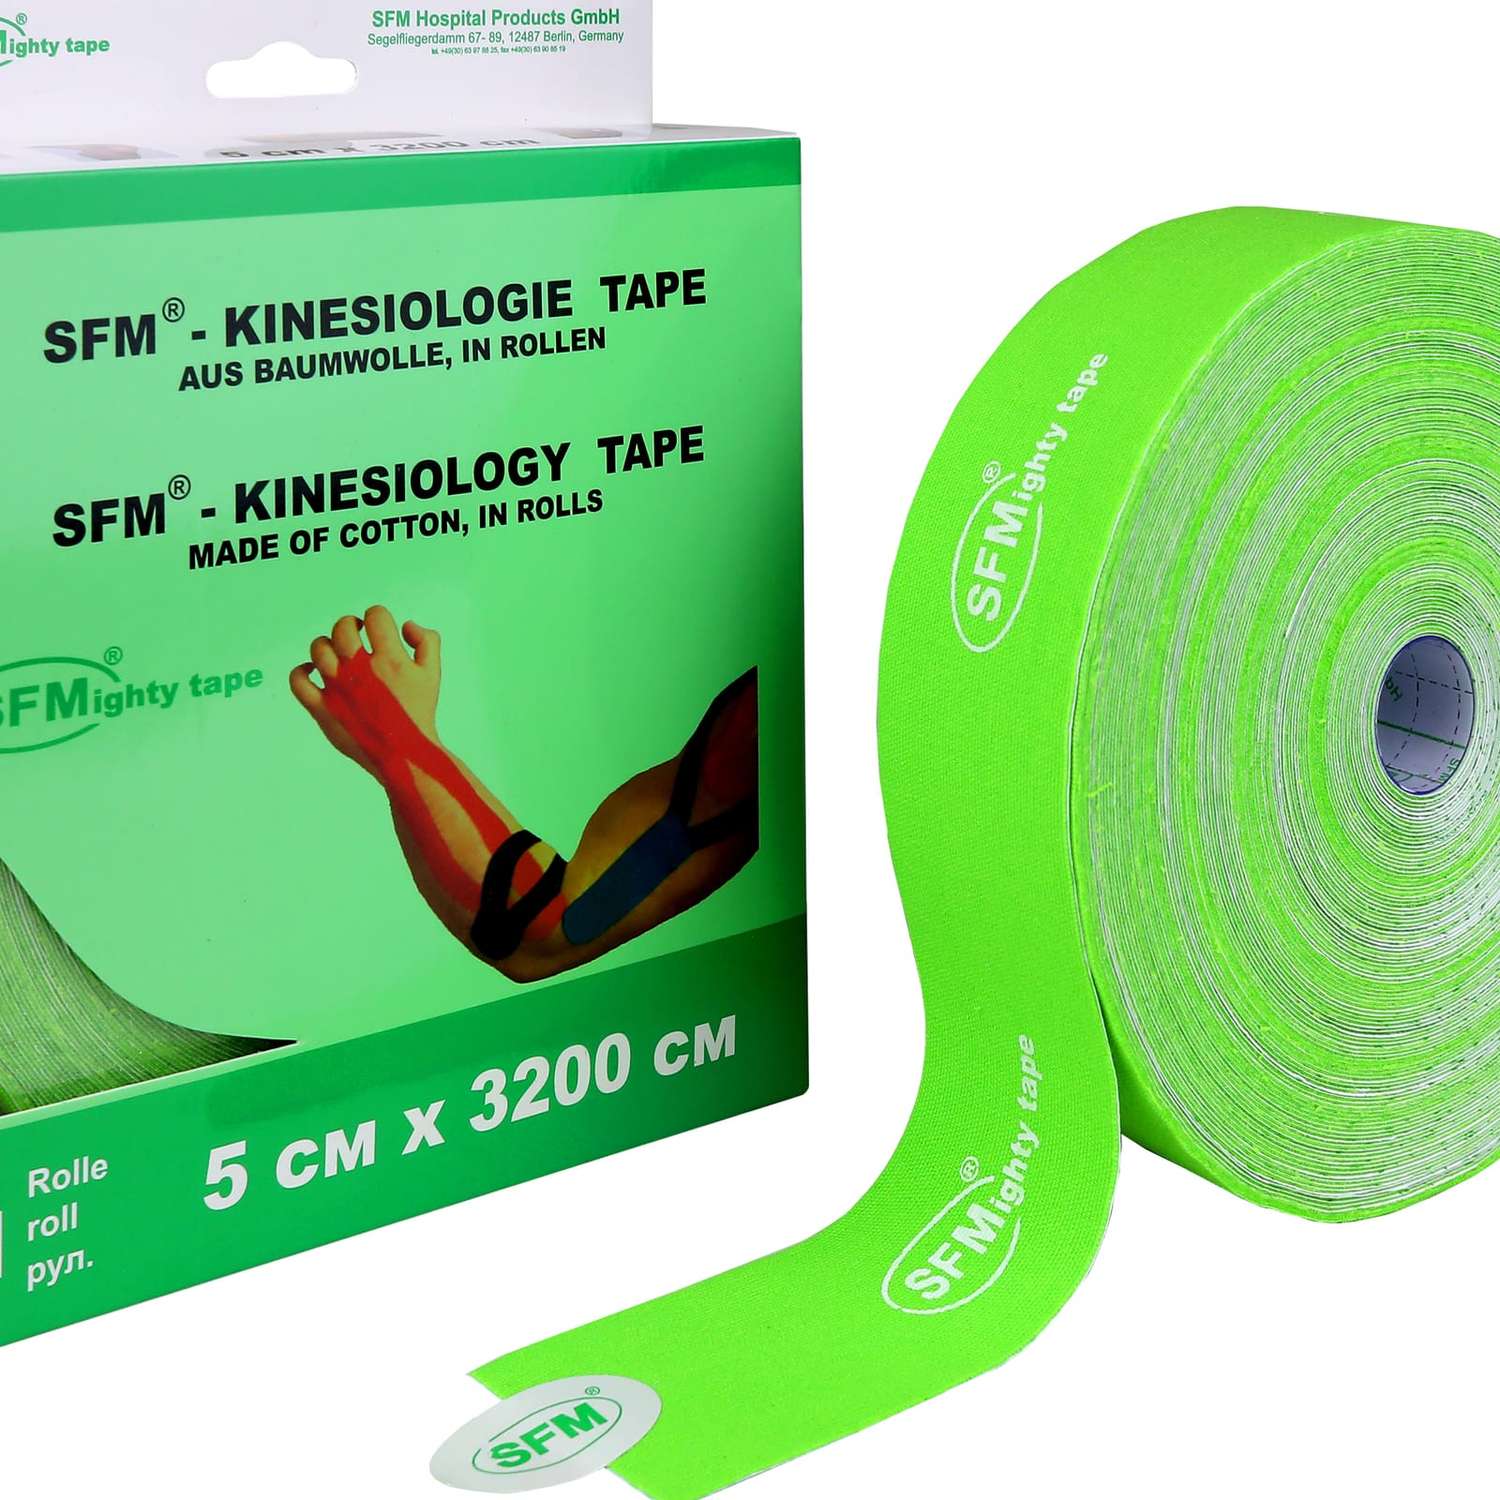 Кинезиотейп SFM Hospital Products Plaster на хлопковой основе 5х3200 см зеленого цвета в диспенсере с логотипом - фото 2